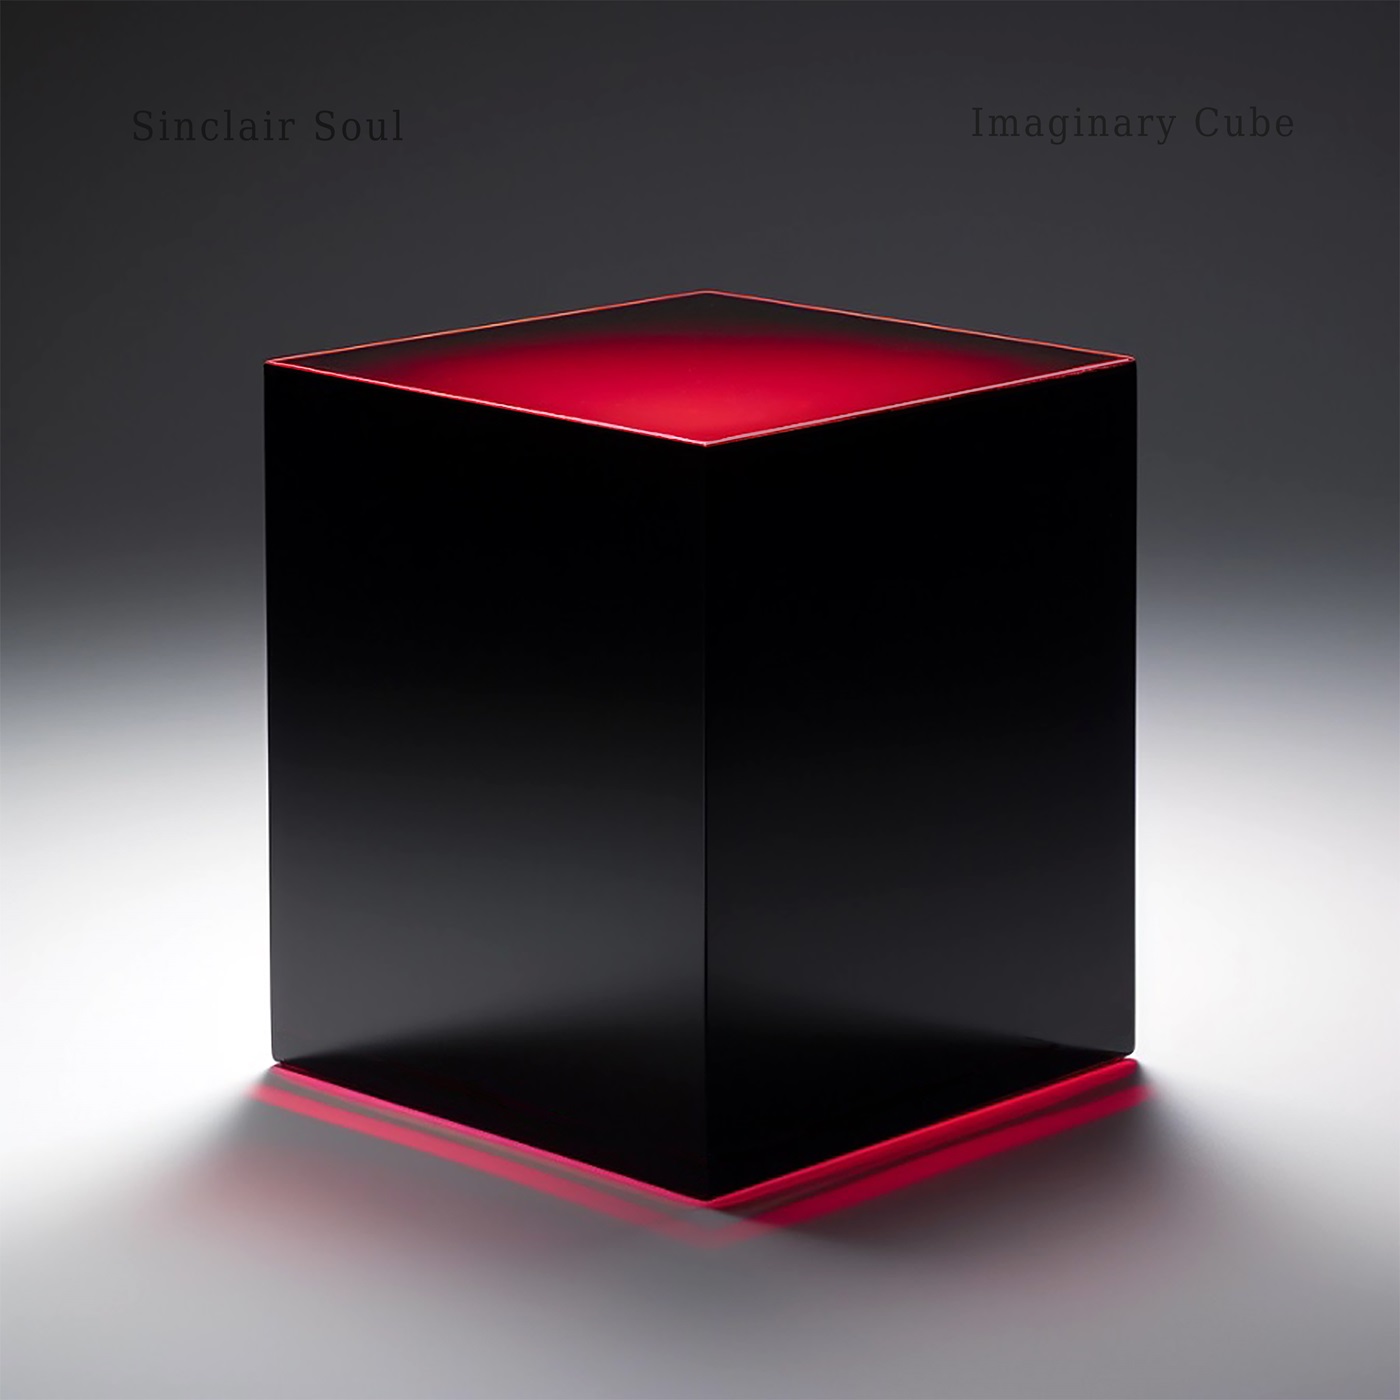 Imaginary Cube